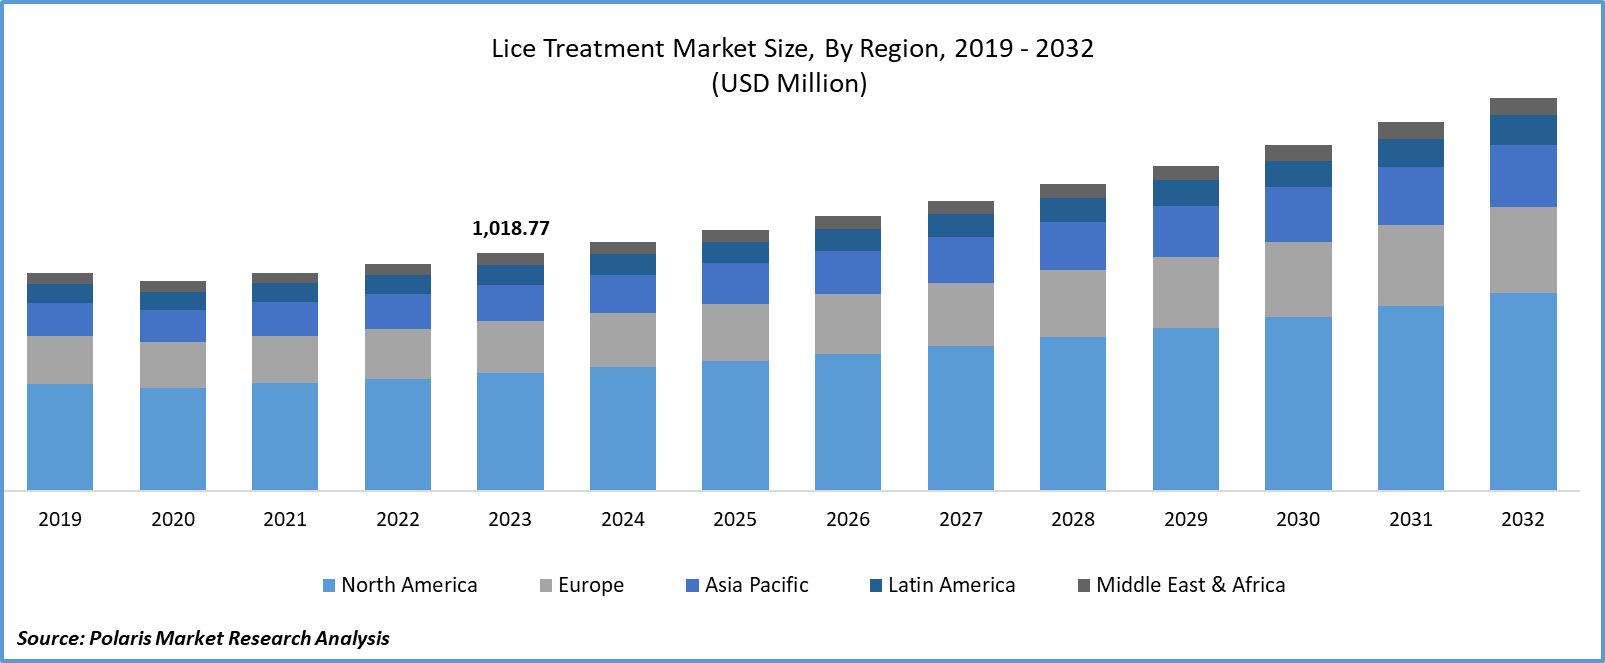 Lice Treatment Market Size